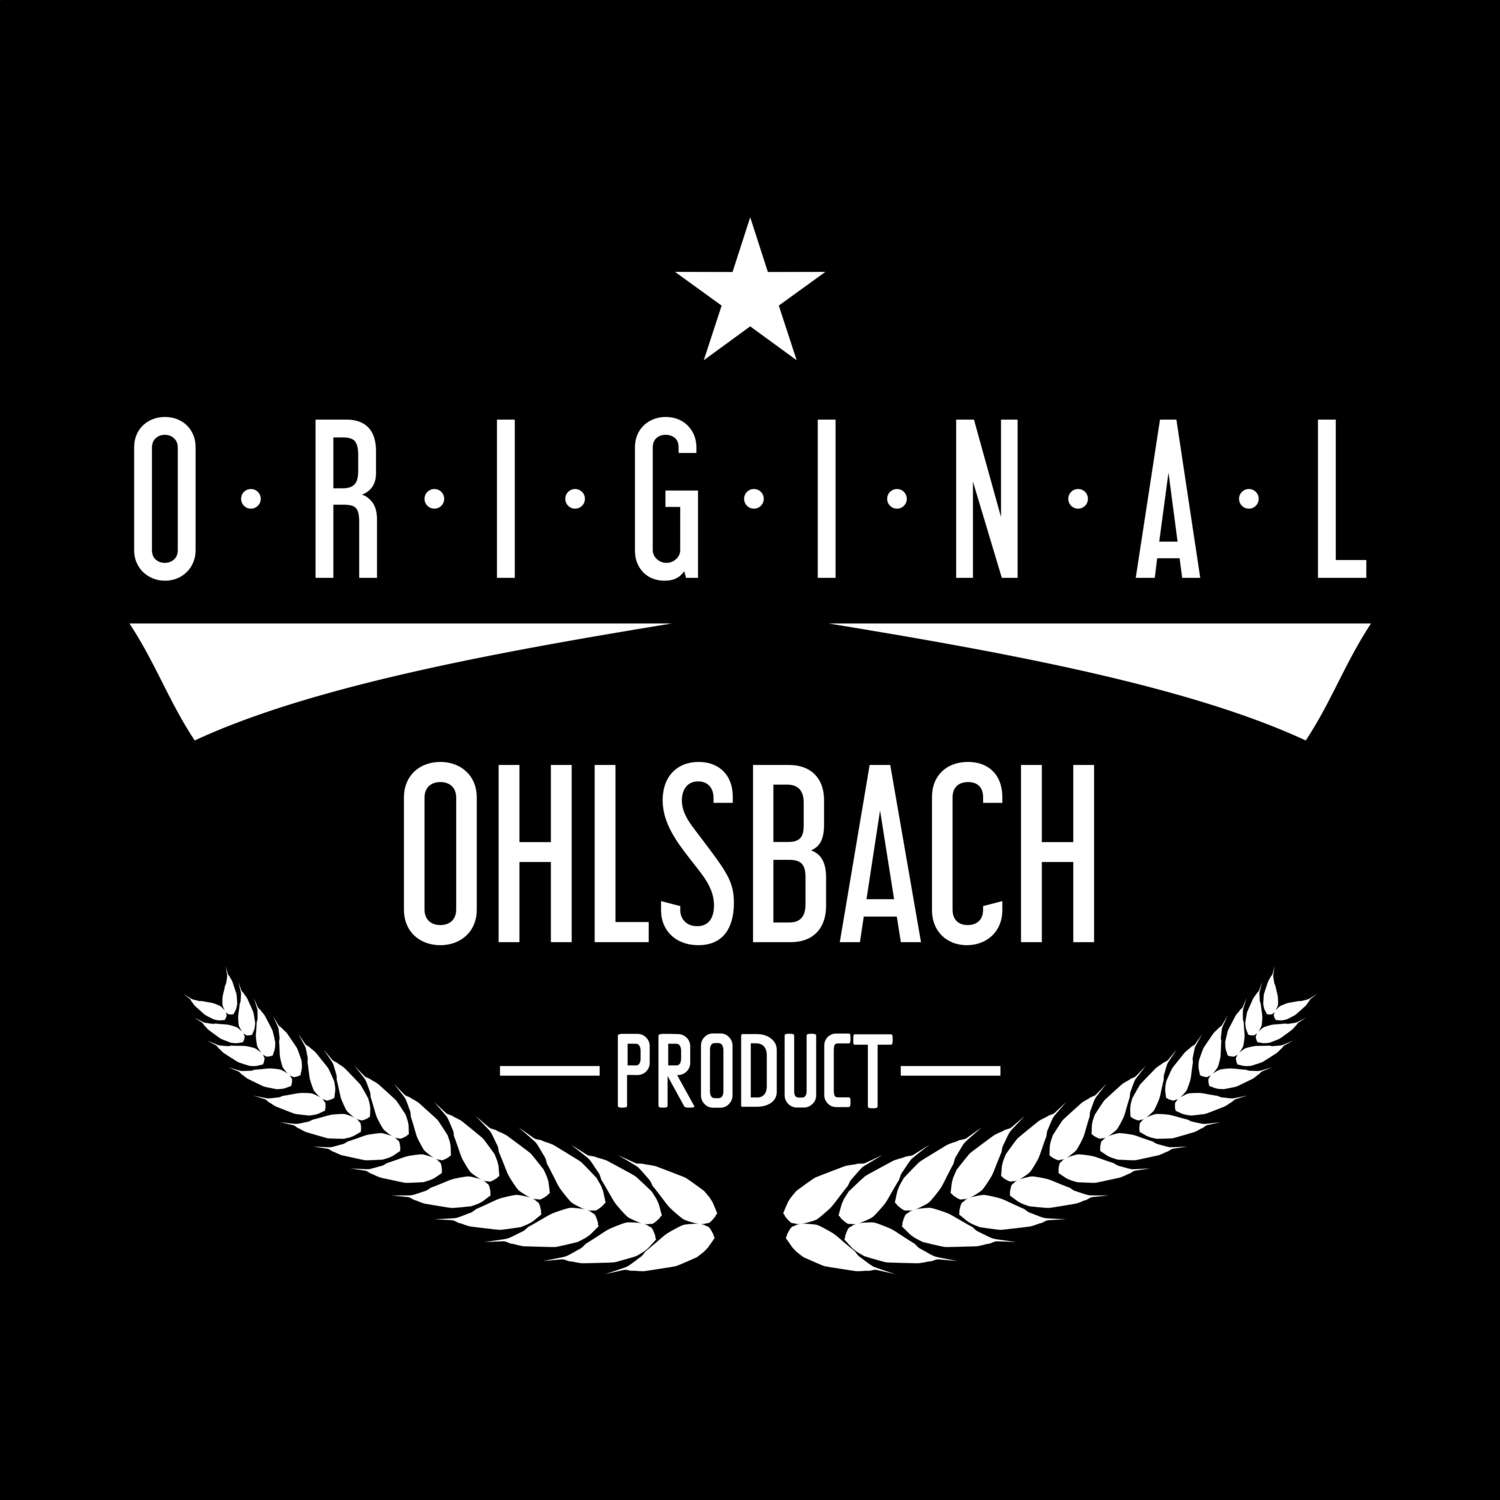 Ohlsbach T-Shirt »Original Product«